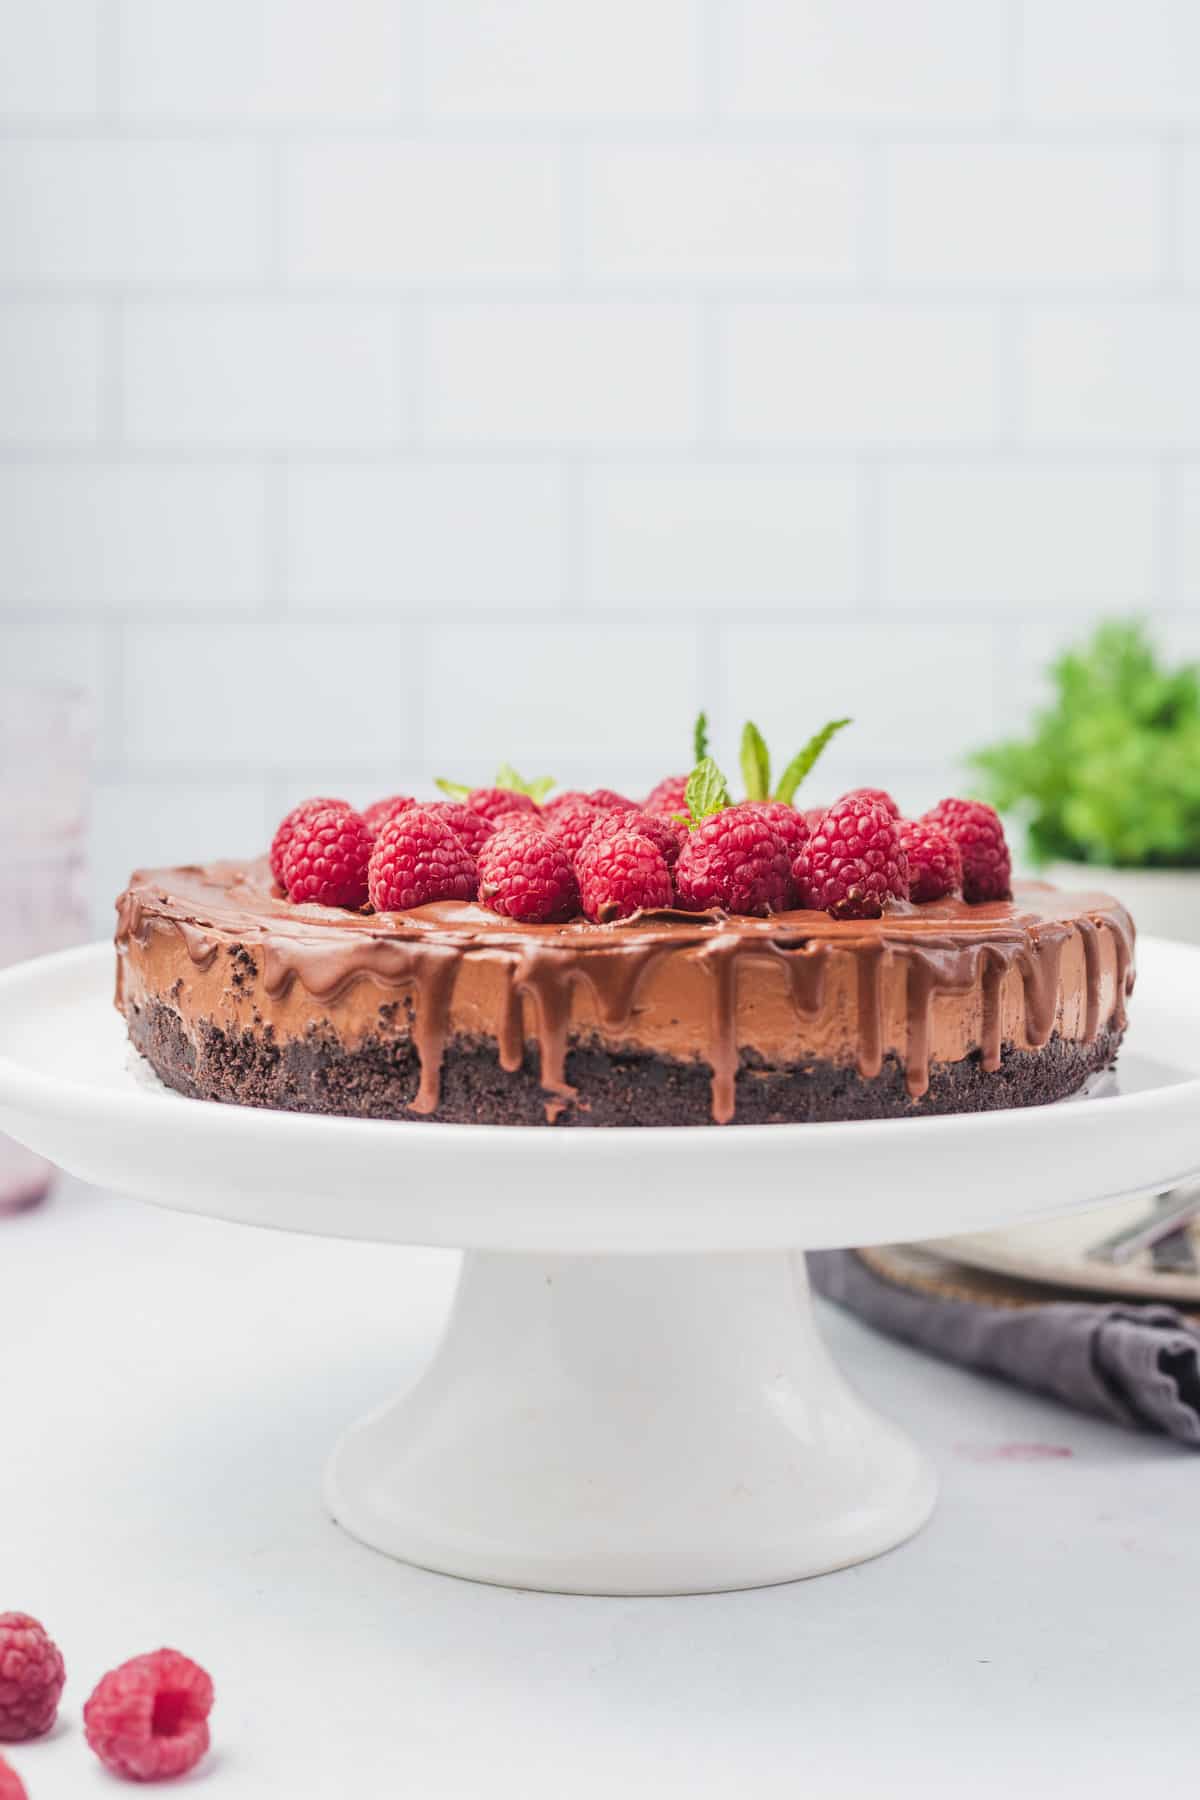 Vegan cake on a white tray with raspberries.